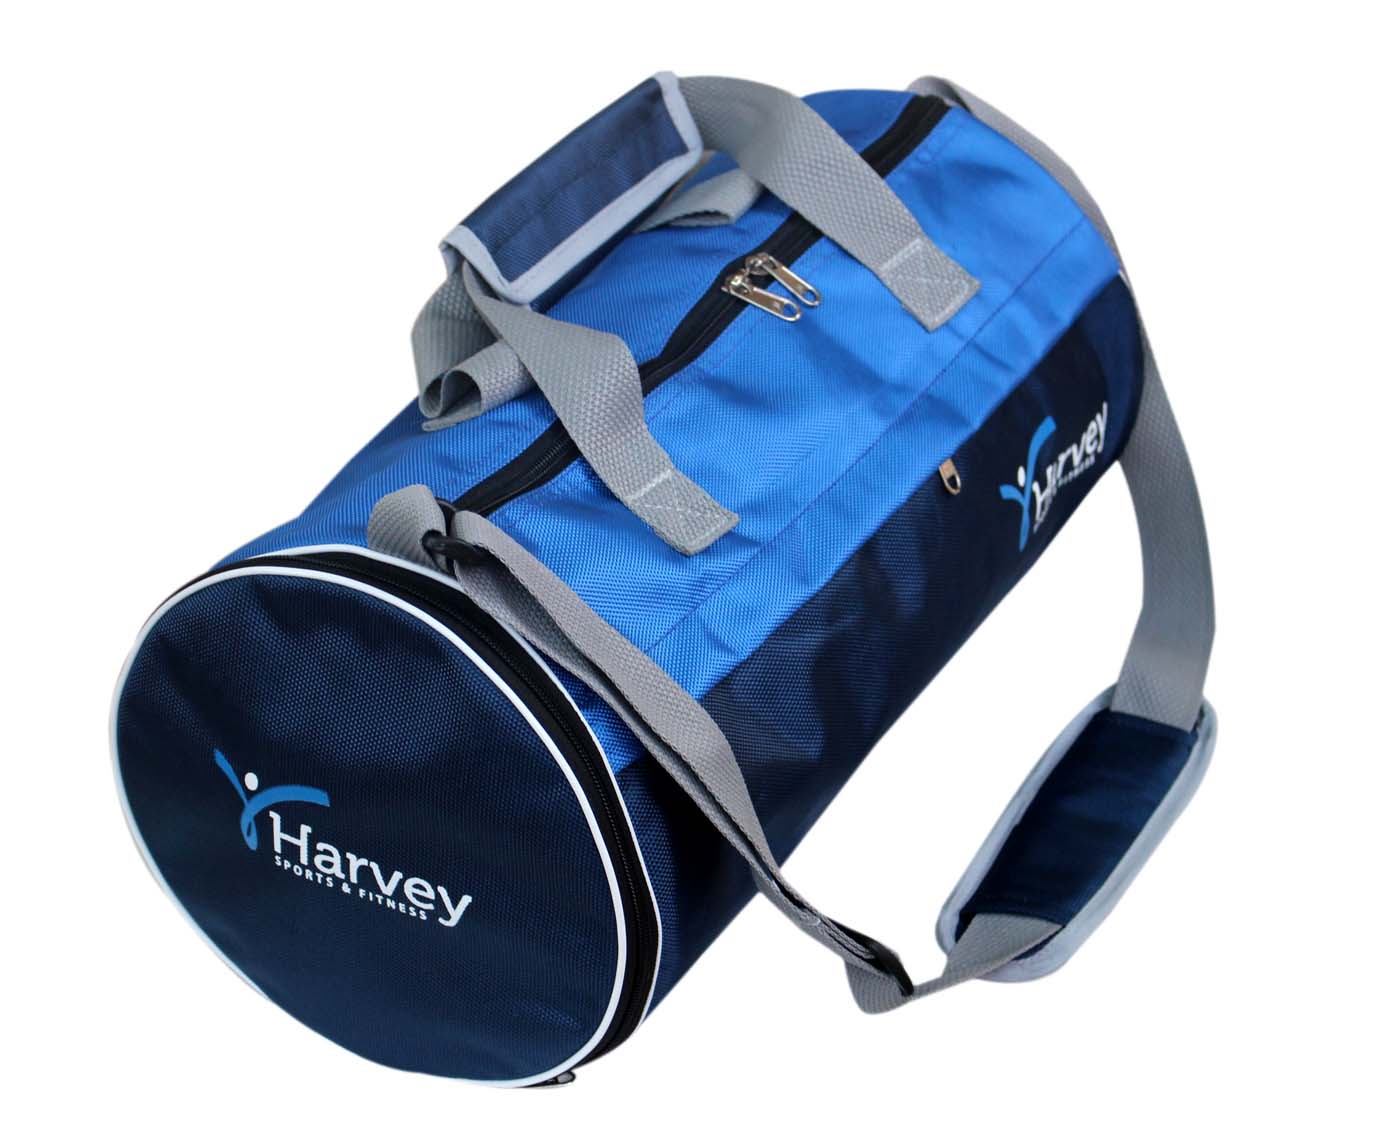 Gym Bag   Smart Waterproof Gym Bag Round Sports Duffel Bag with Shoe Compartment Travel Sports Bag  Harvey BLU Royal 